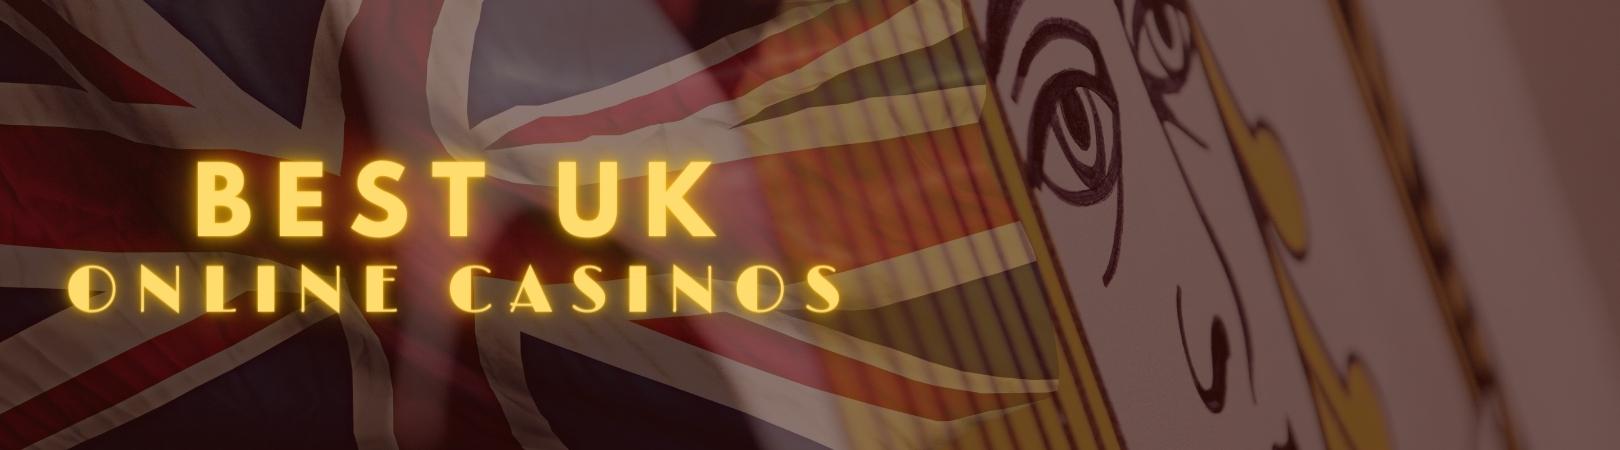 Best UK online casinos img